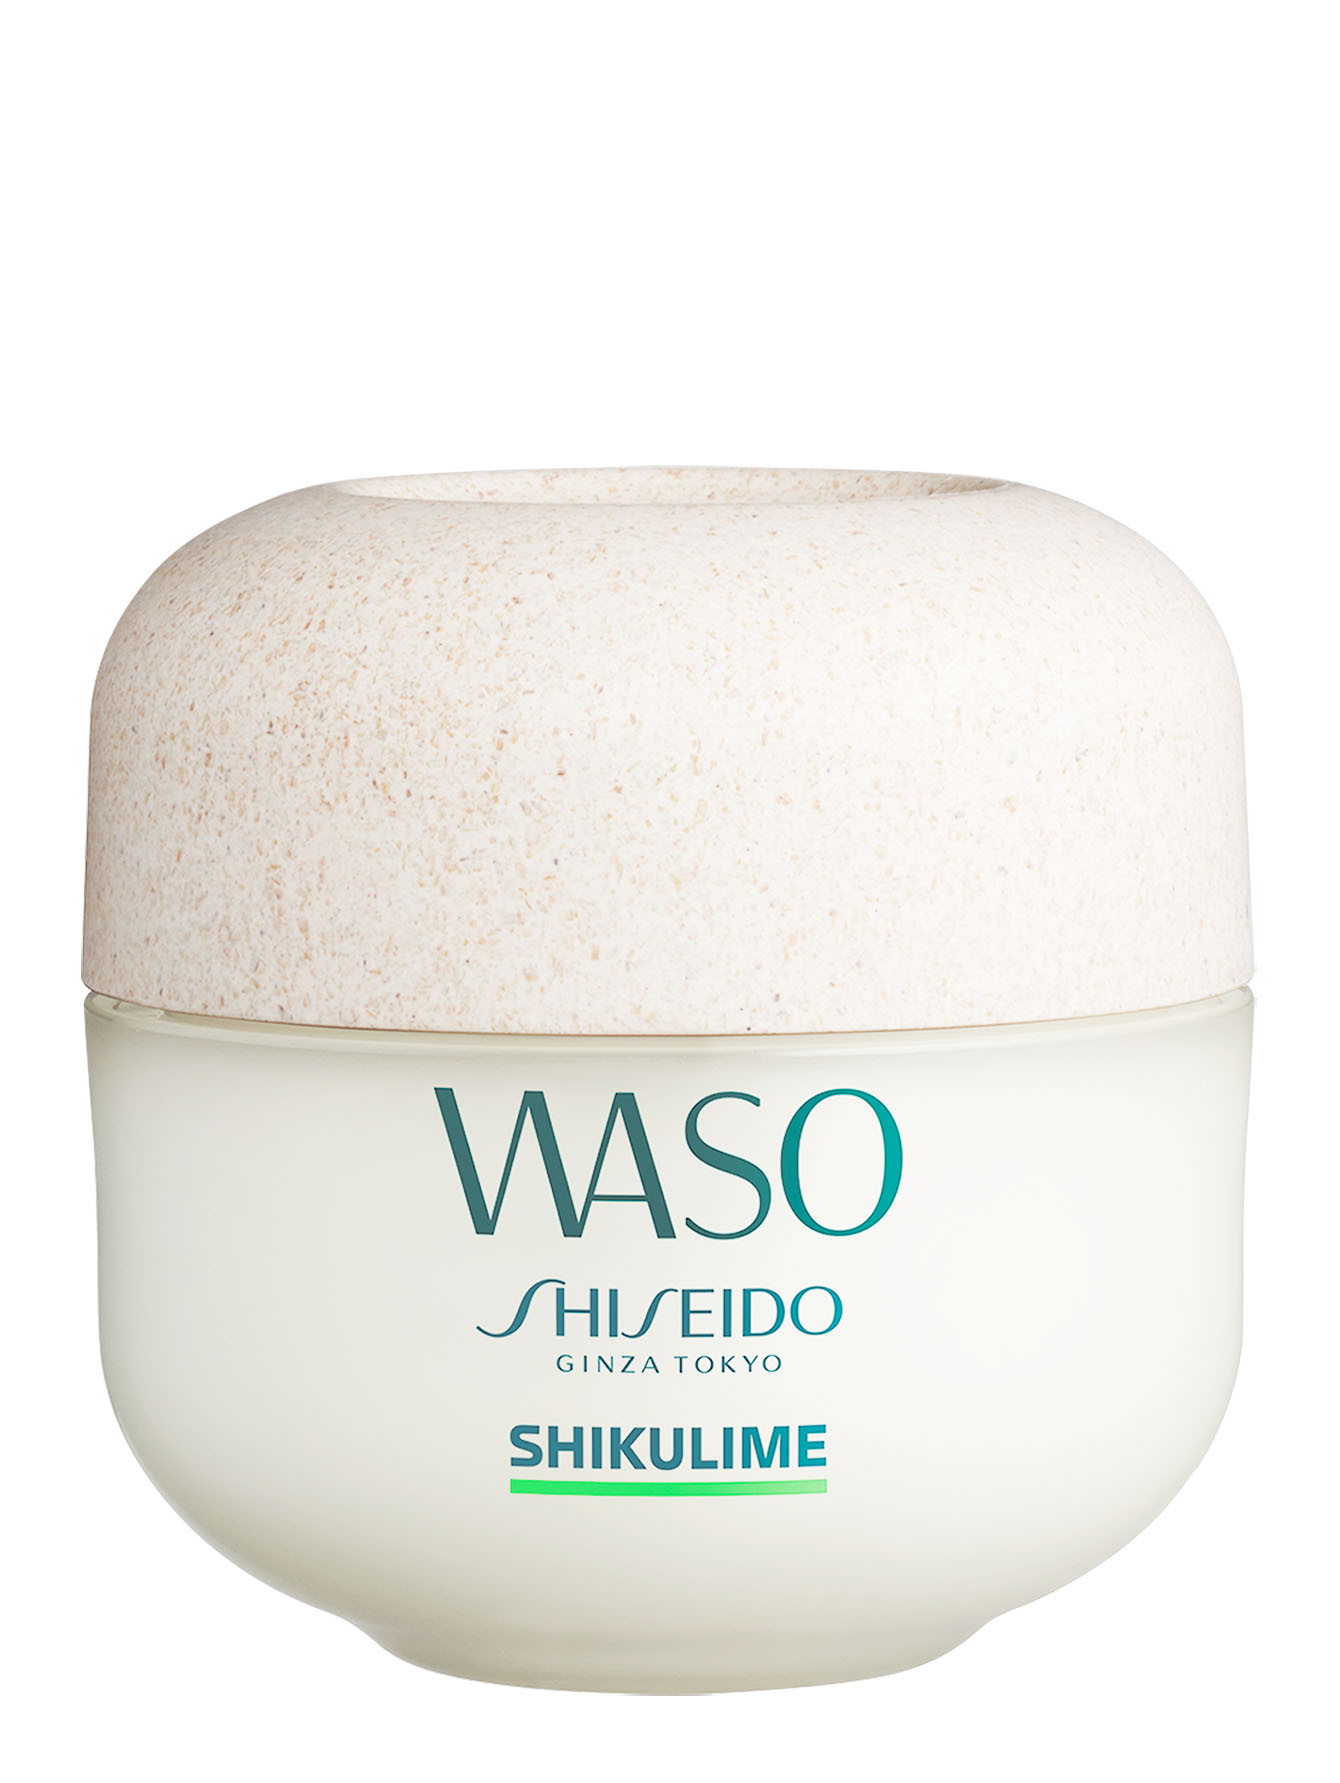 SHISEIDO WASO SHIKULIME Мегаувлажняющий крем, 50 мл - Общий вид